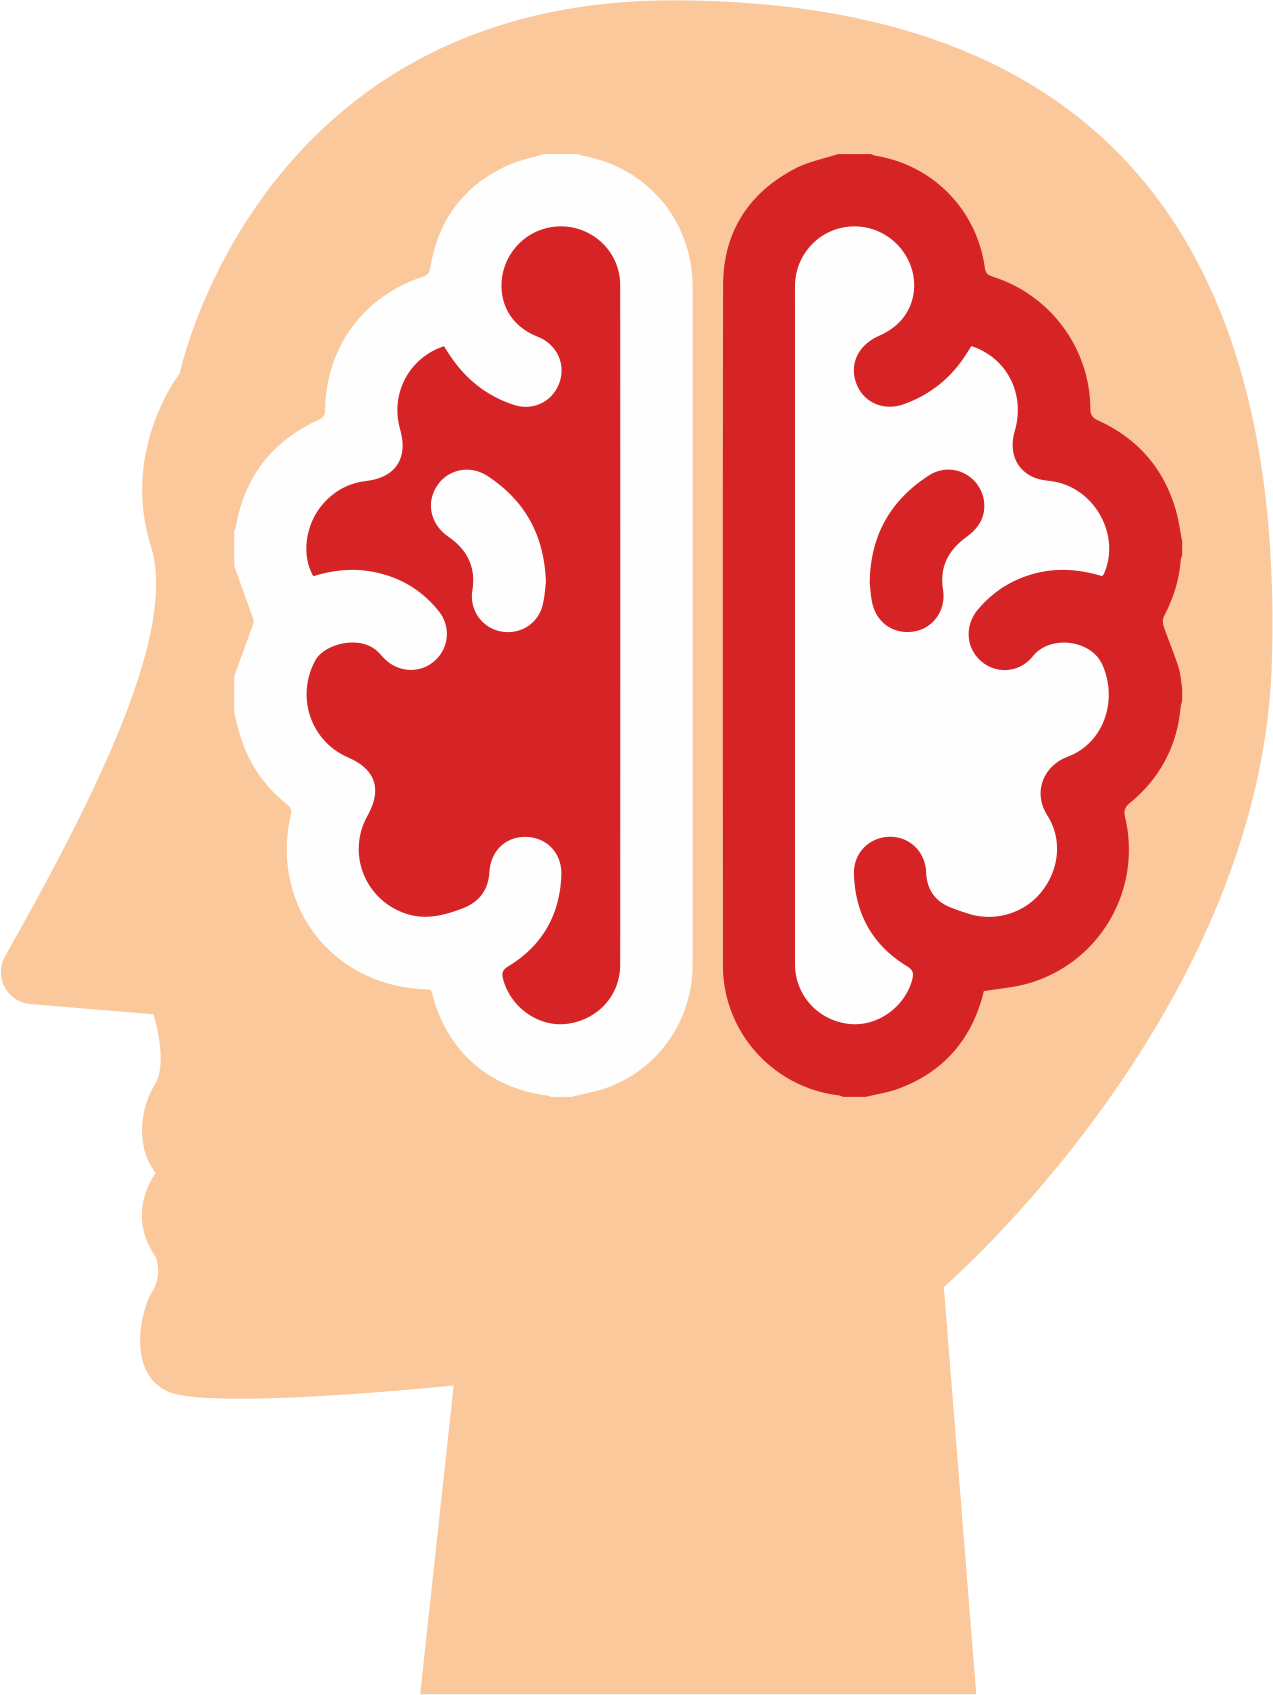 Neurology Image